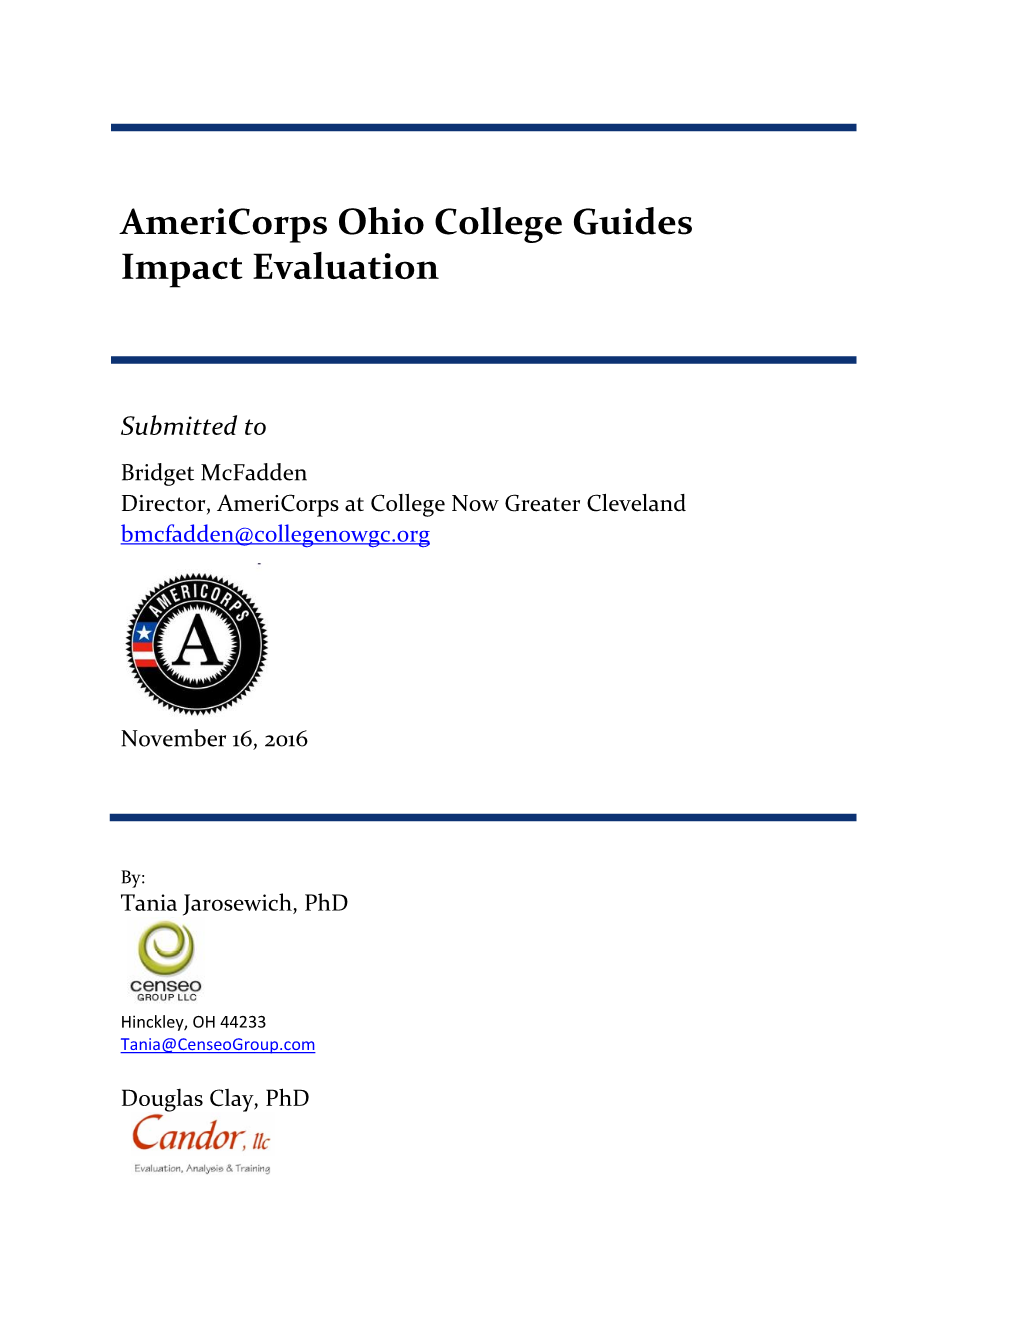 Americorps Ohio College Guides Impact Evaluation